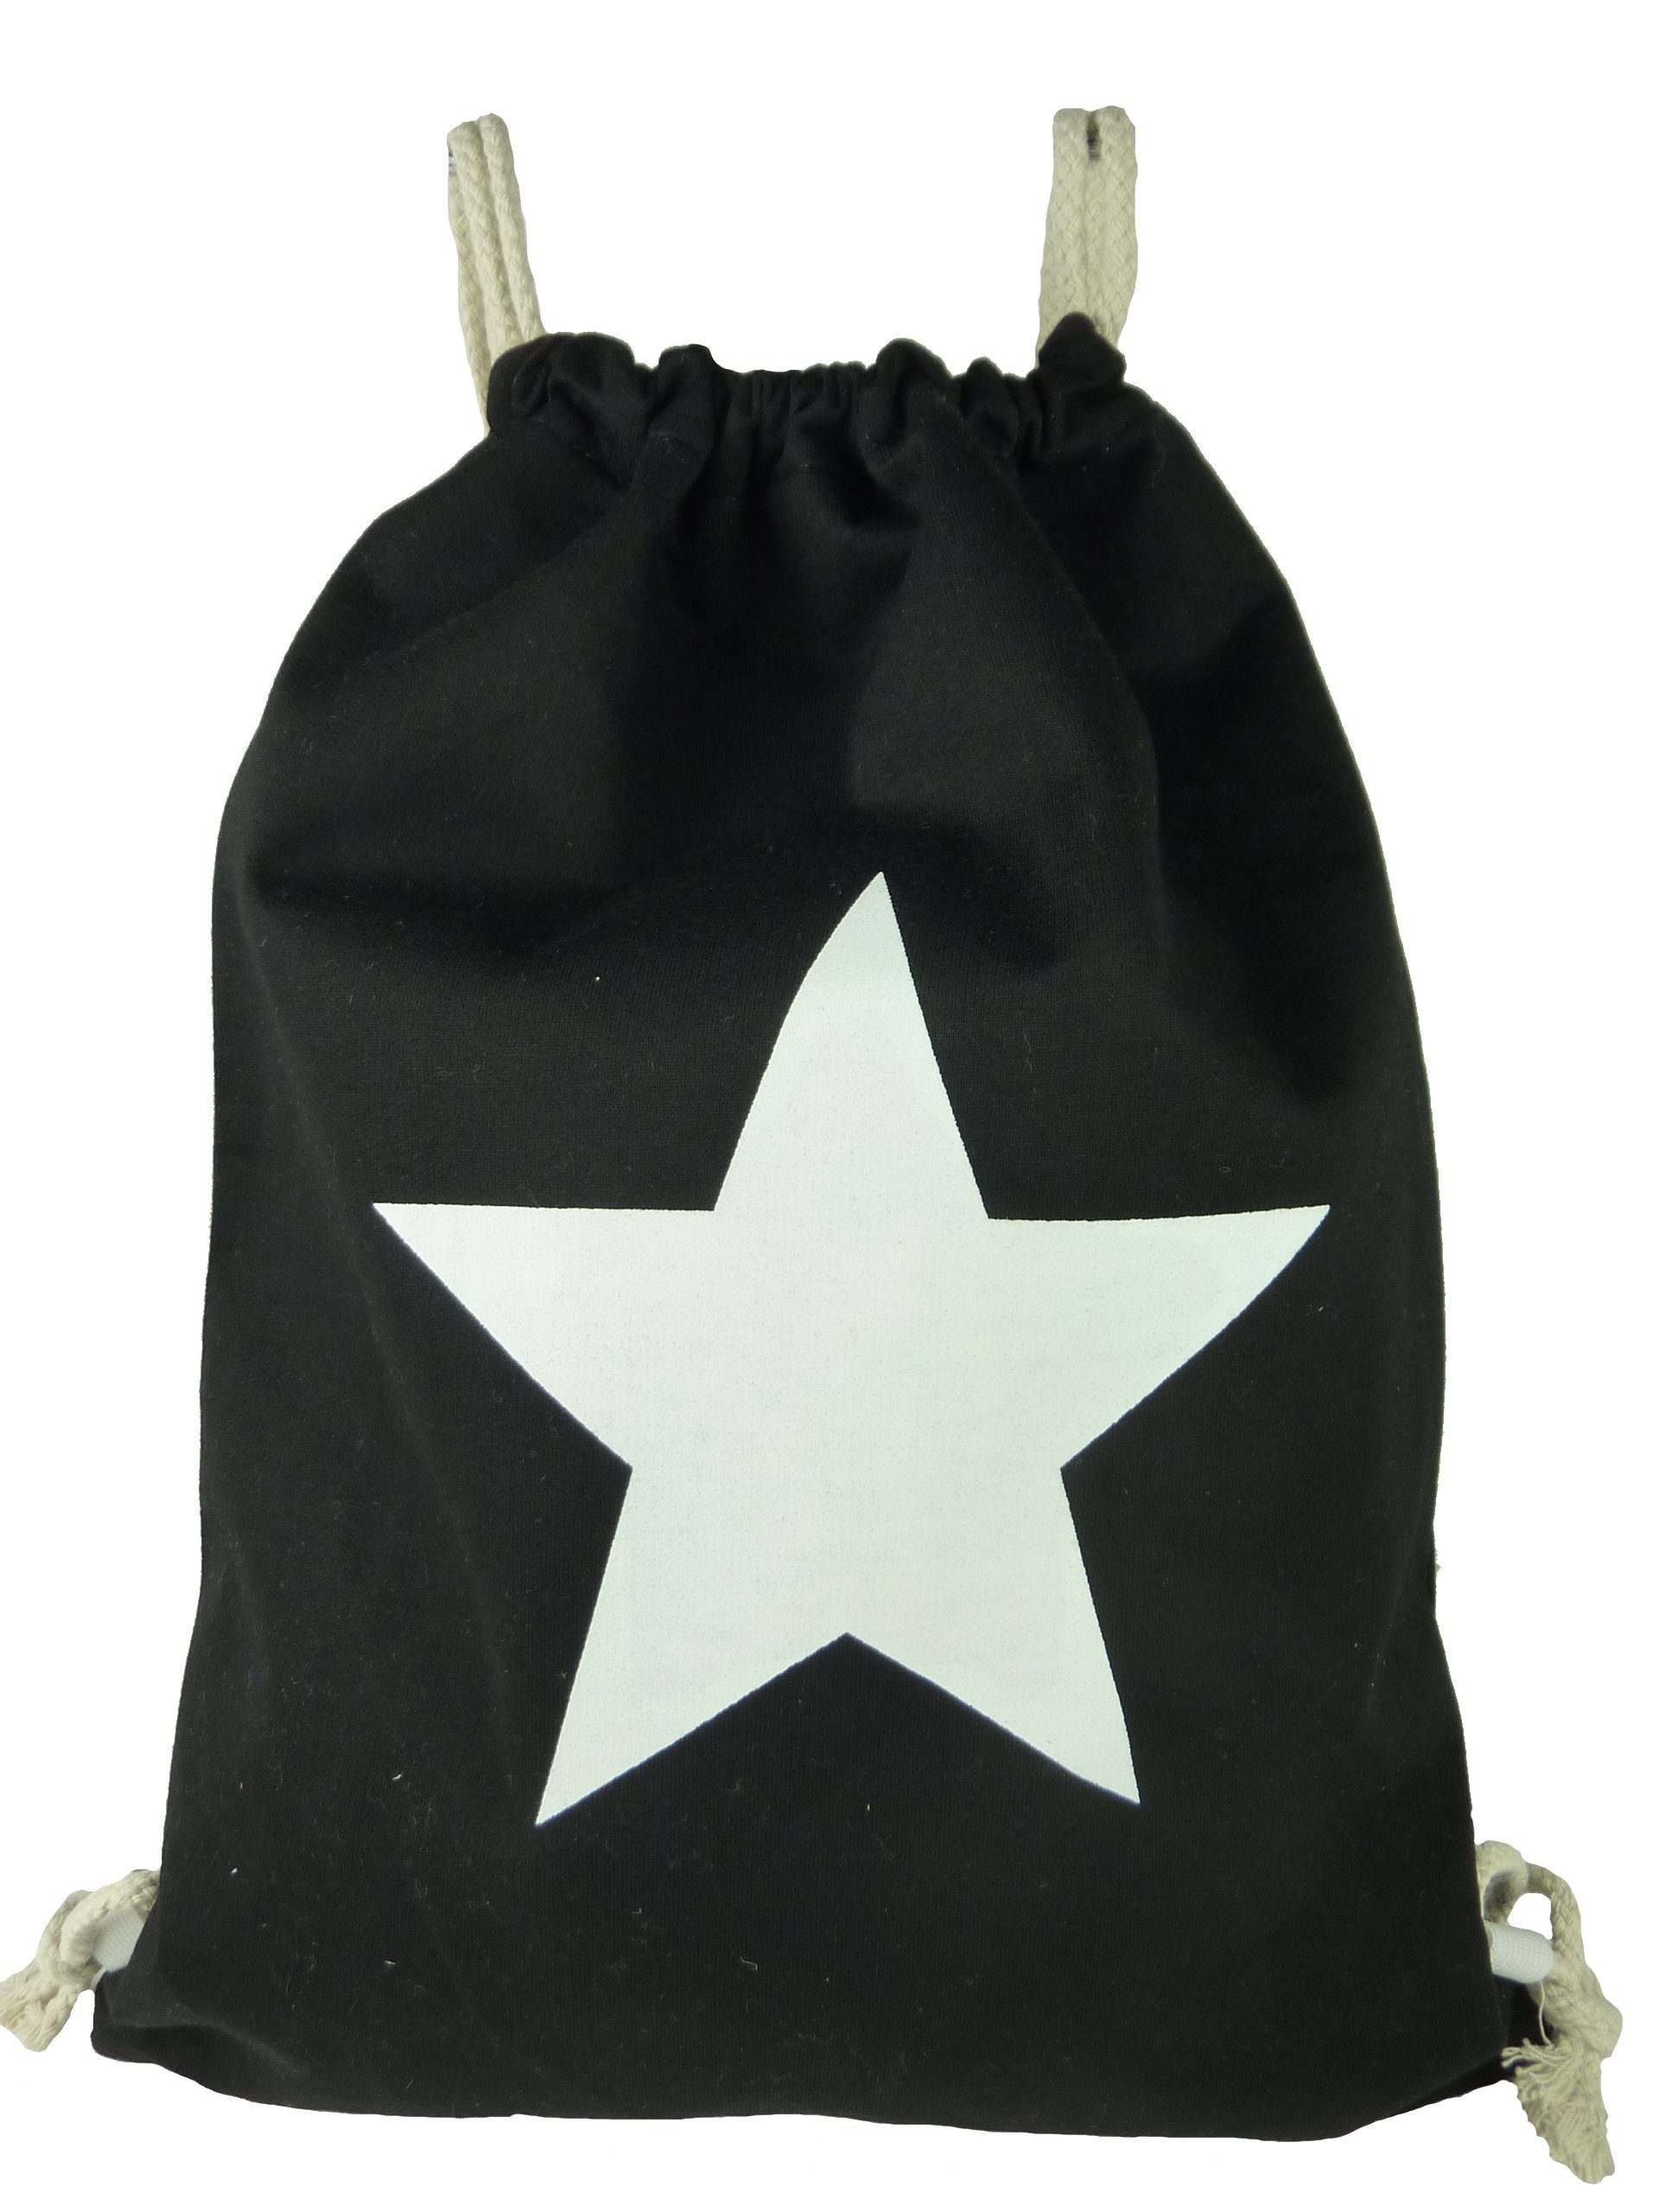 schwarz Gymbag Rucksack bag, mit Stern, Sportbeutel 1605, Jute Beutel, sling Turnbeutel Taschen4life großem